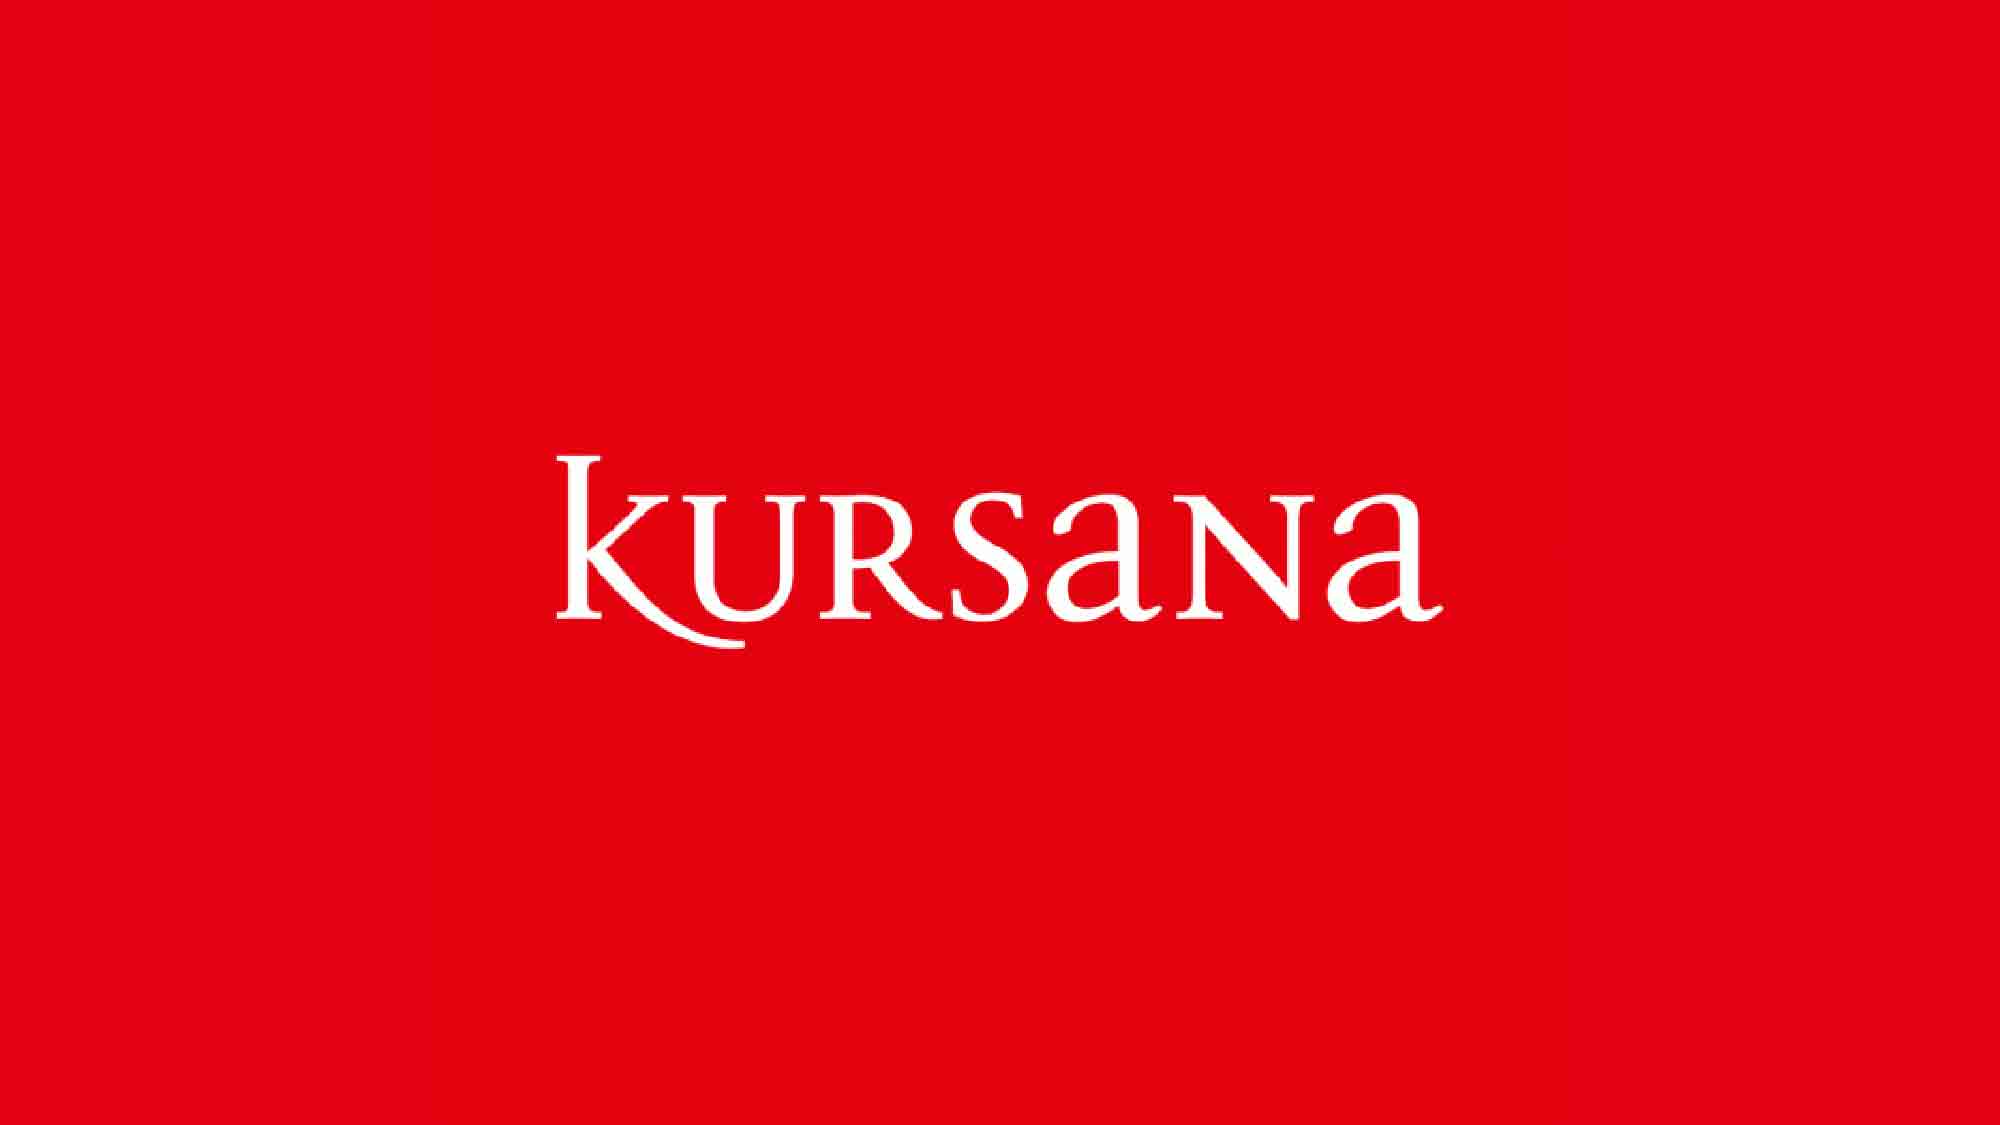 Kursana in Gütersloh unter den Top 3 bei bundesweitem Test 